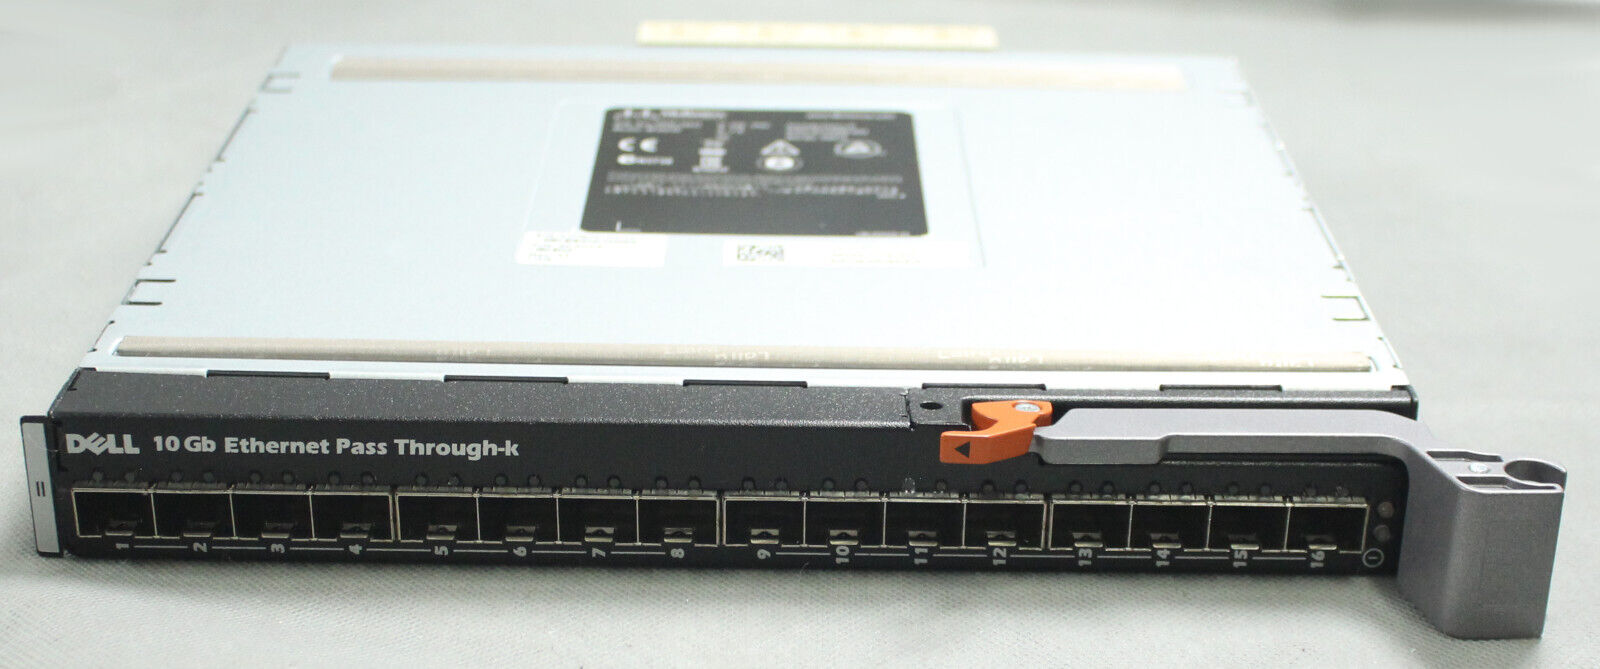 Dell PowerEdge M1000e 10 Gb Ethernet Pass Through-k 0PNDP6 PNDP6